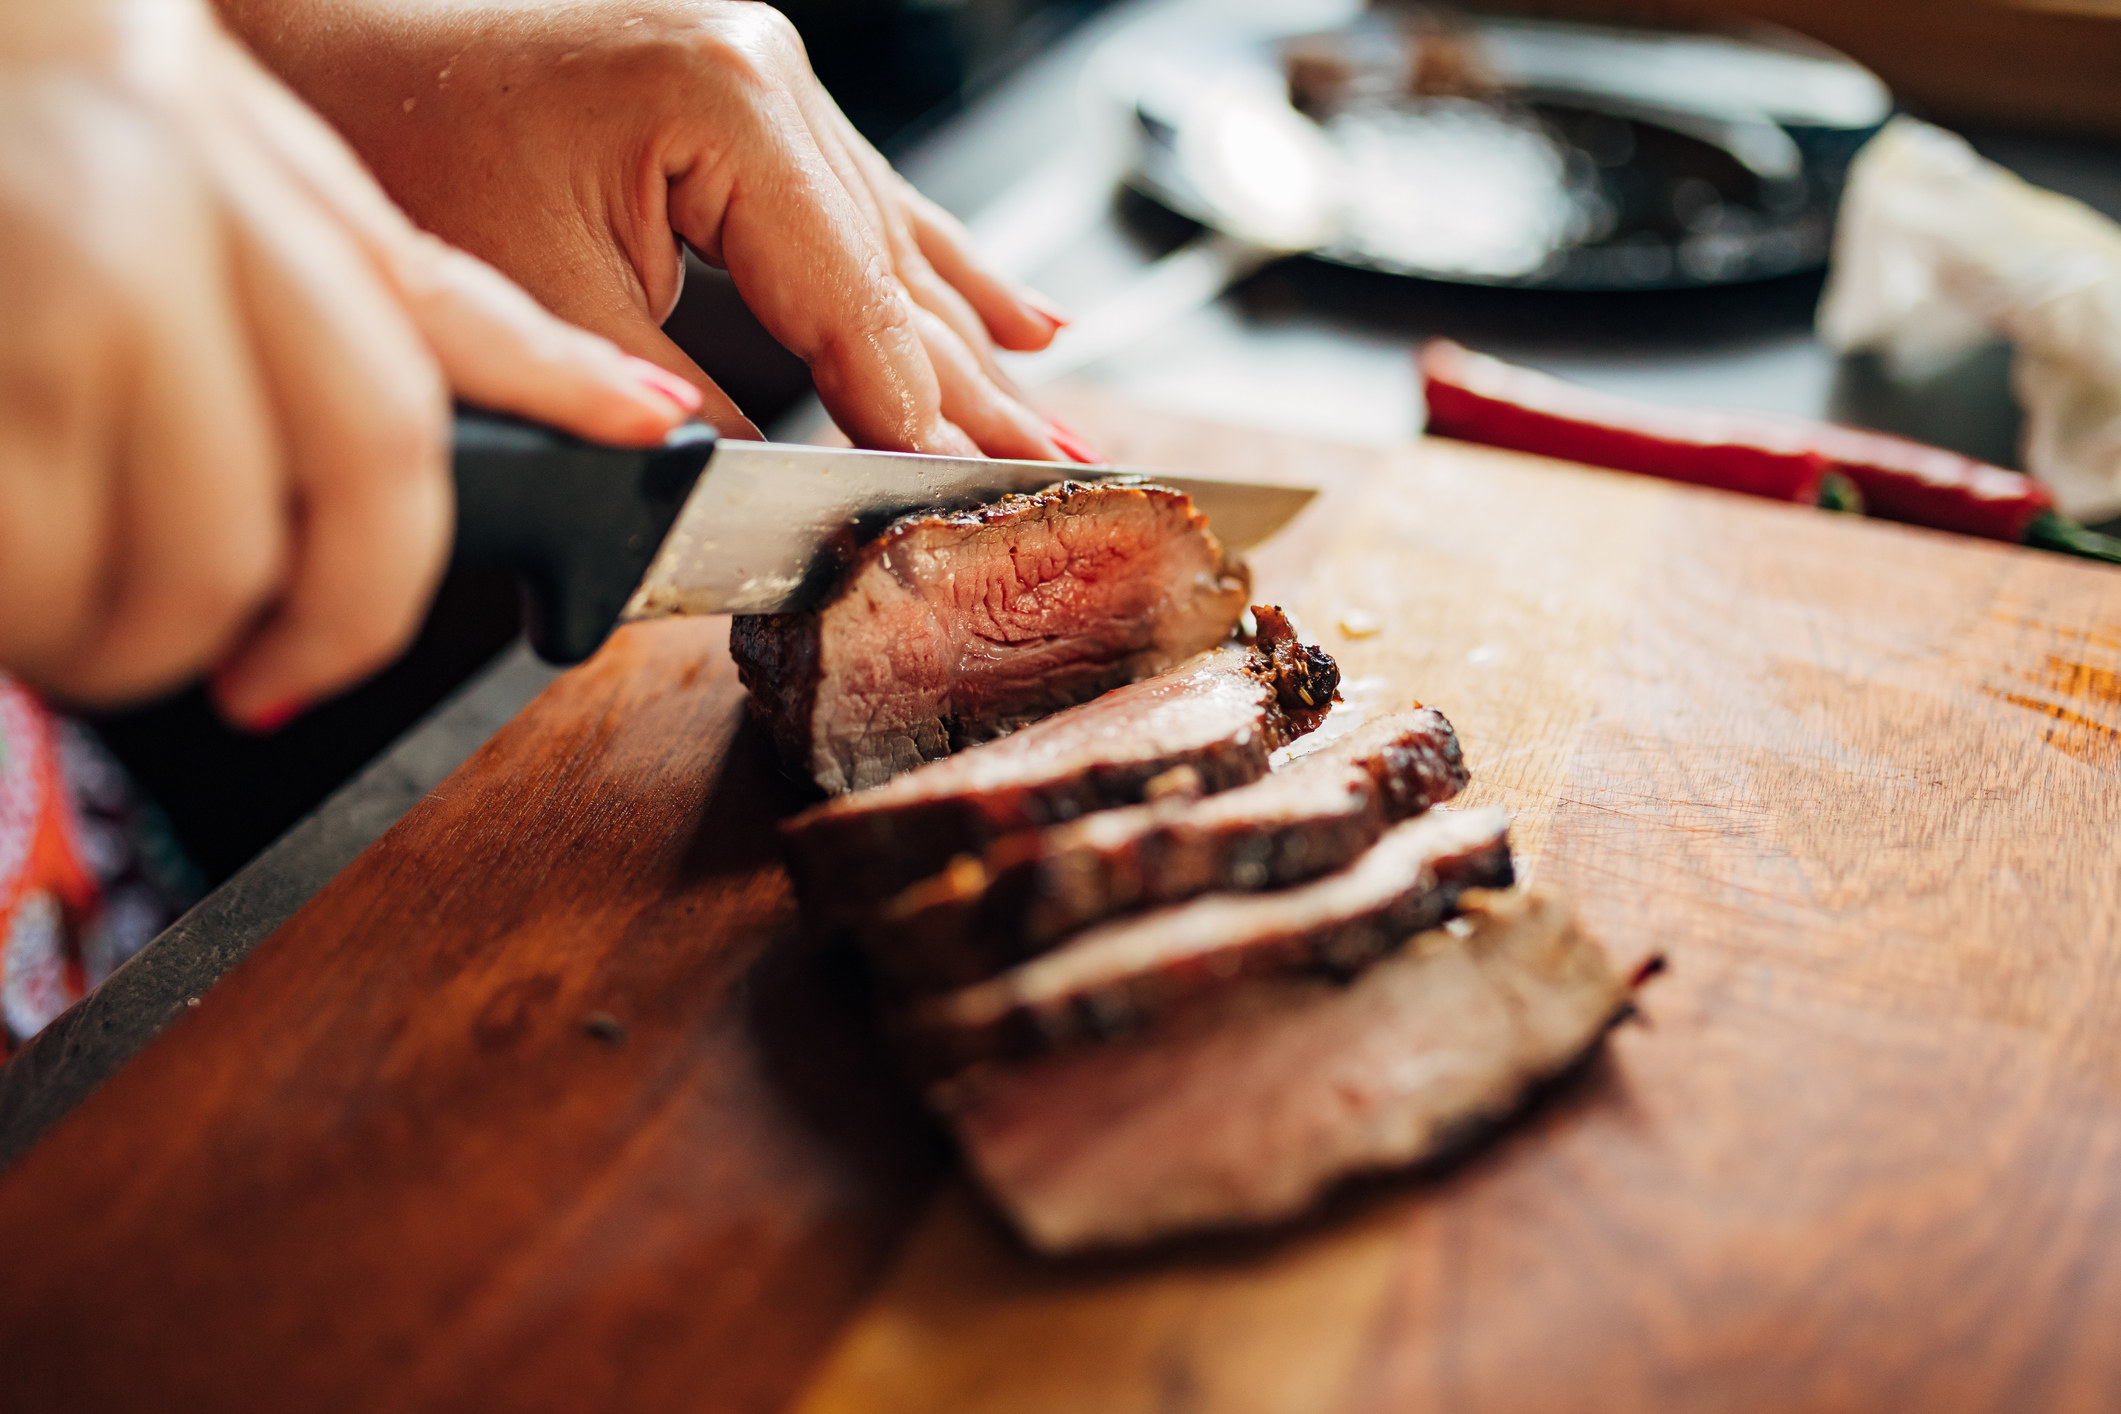 A person slicing a steak on a cutting board.